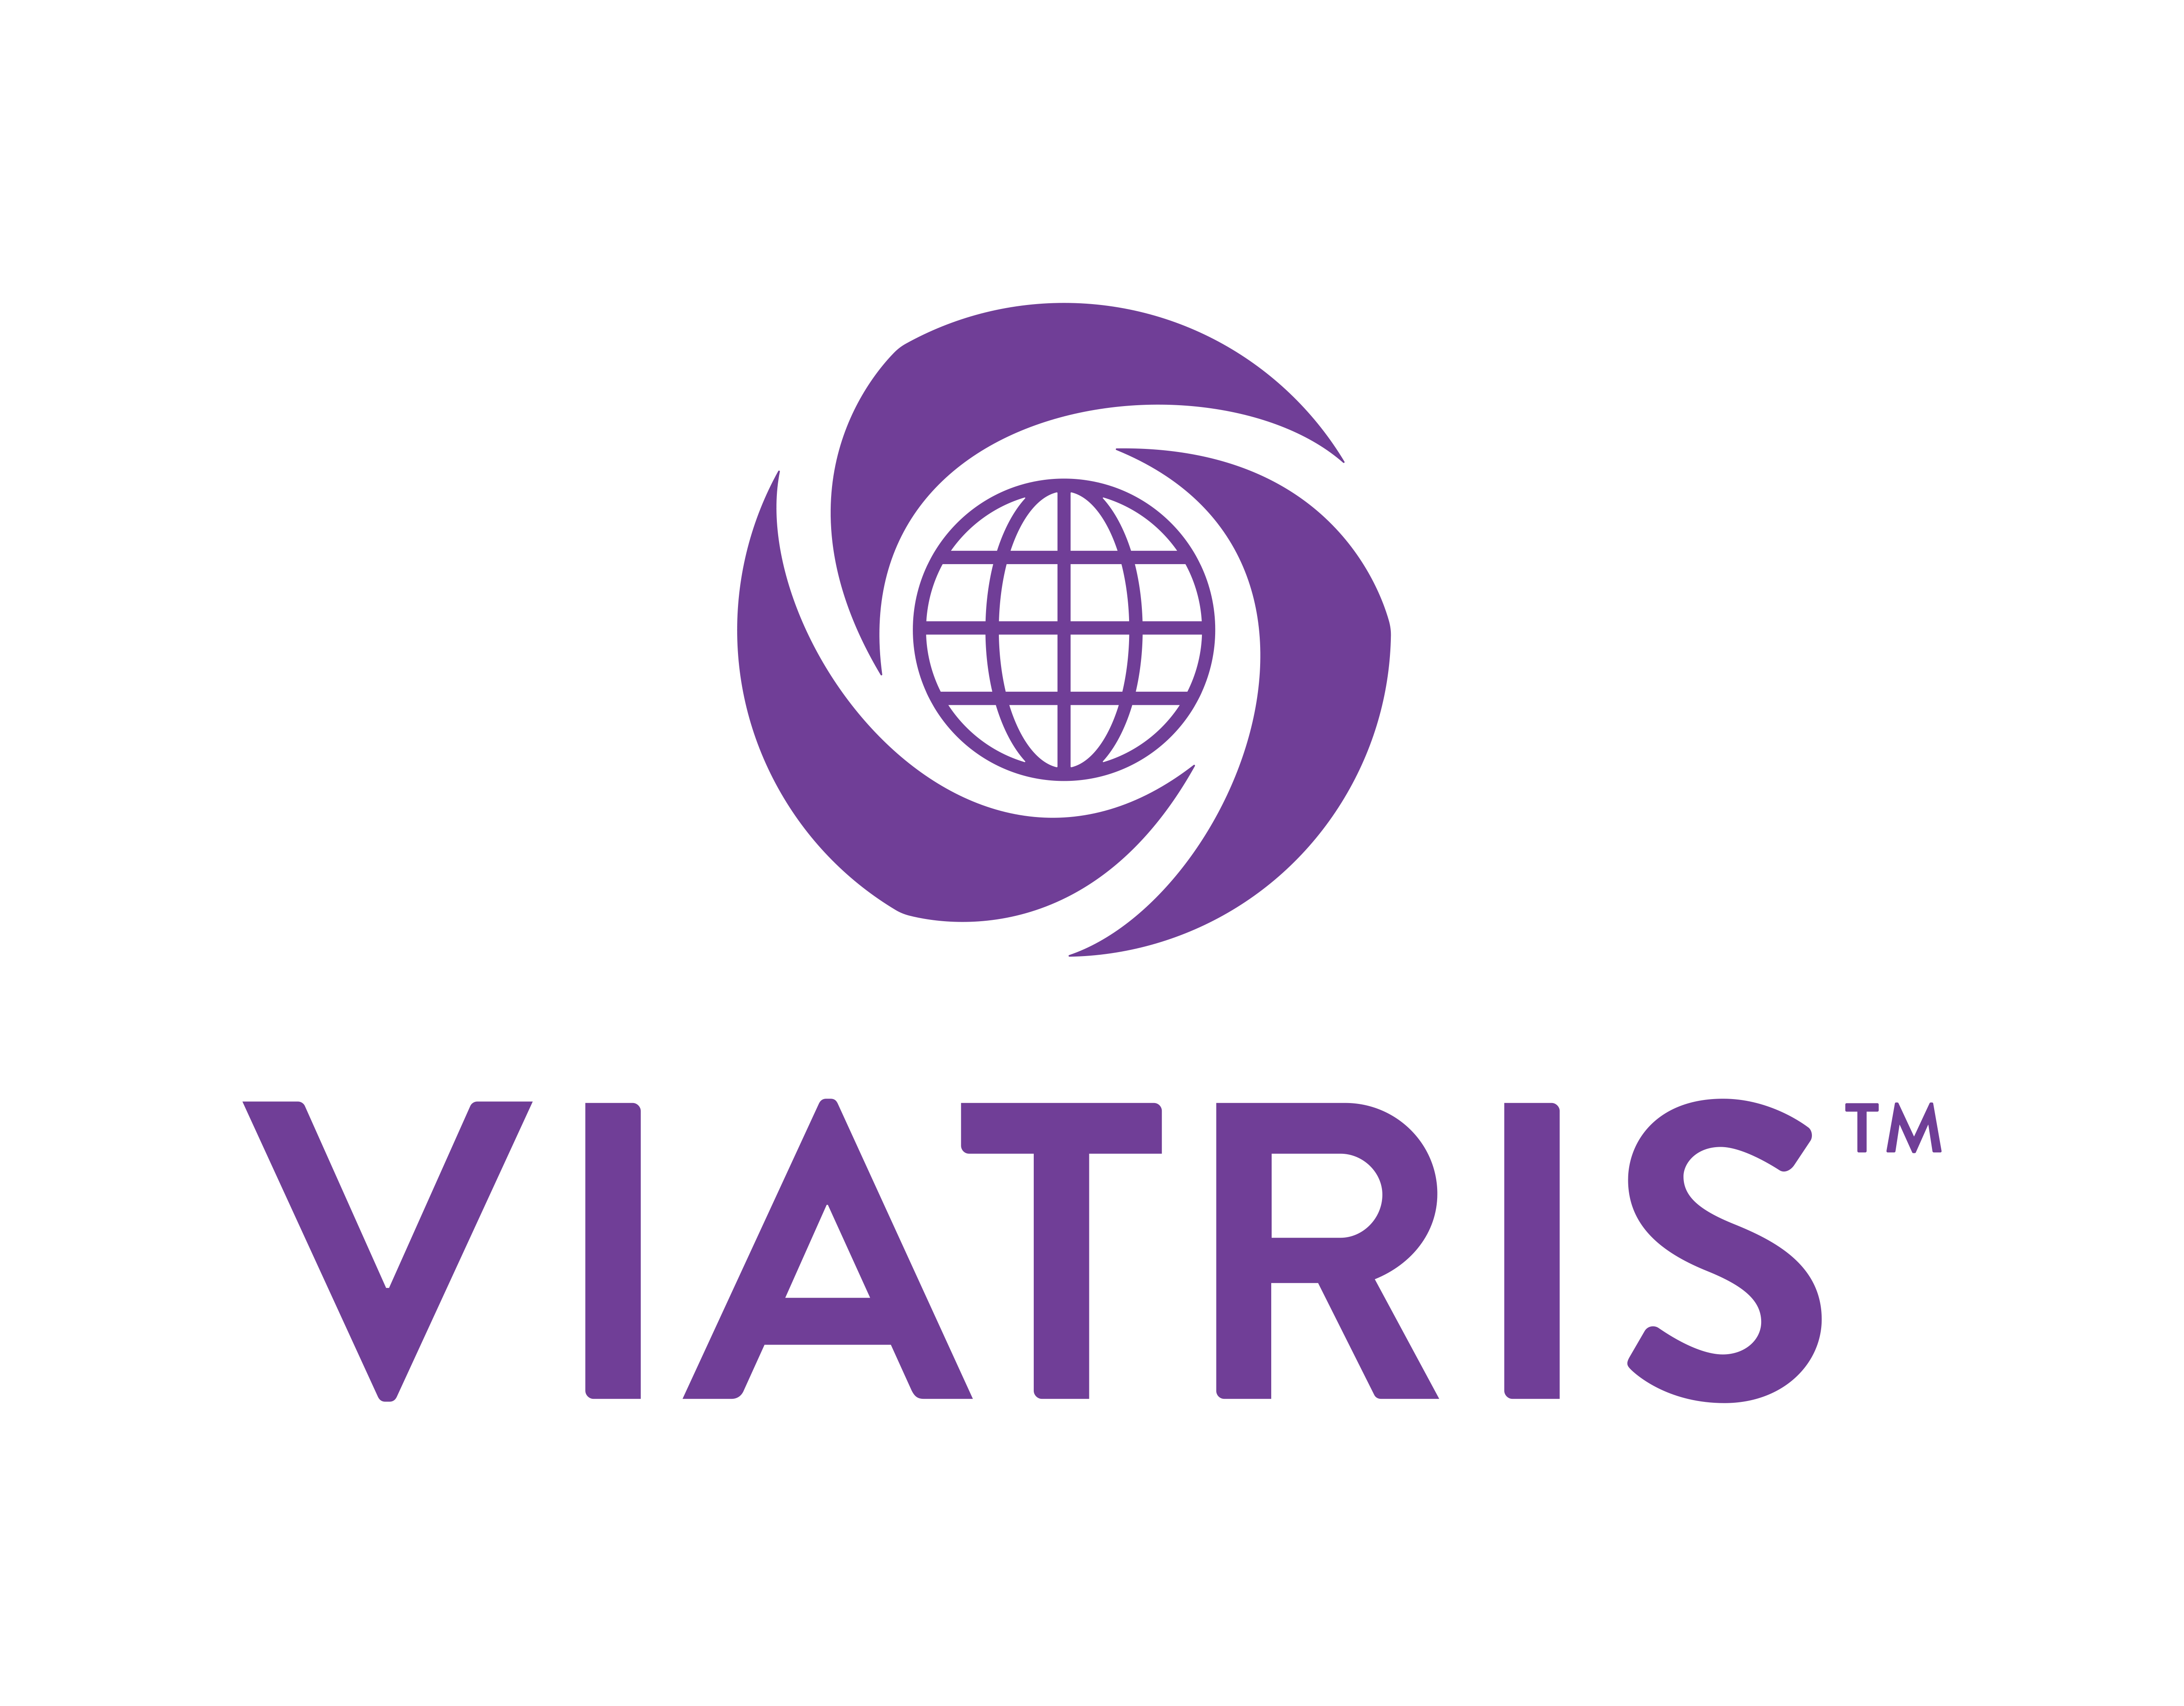 Viatris Inc.